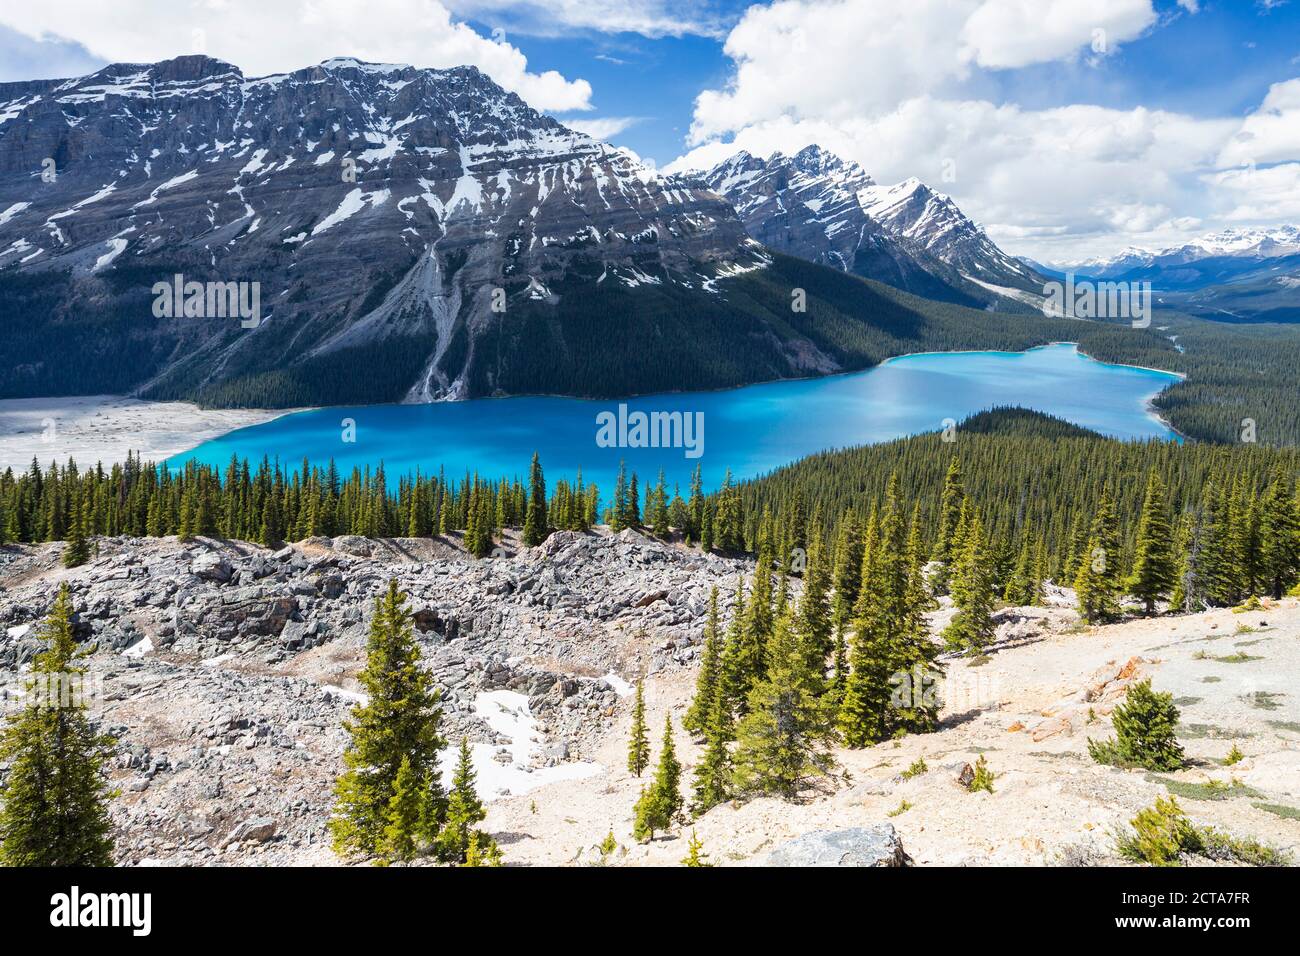 Canada, Alberta, Banff National Park, Peyto Lake seen from Bow Summit Stock Photo